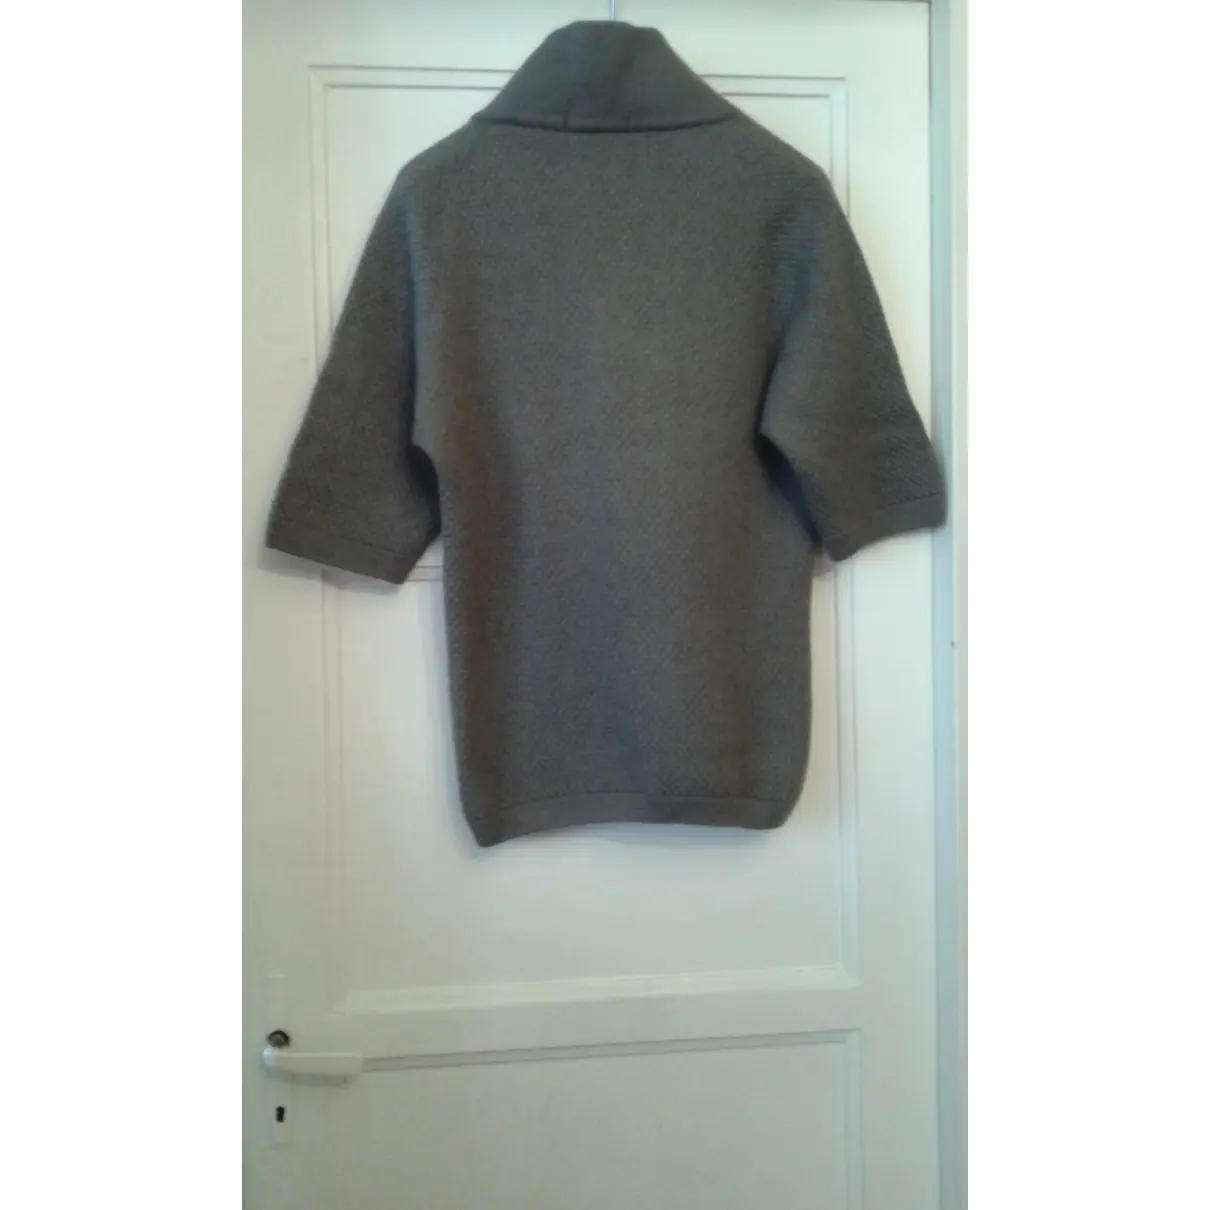 Lacoste Wool jumper for sale